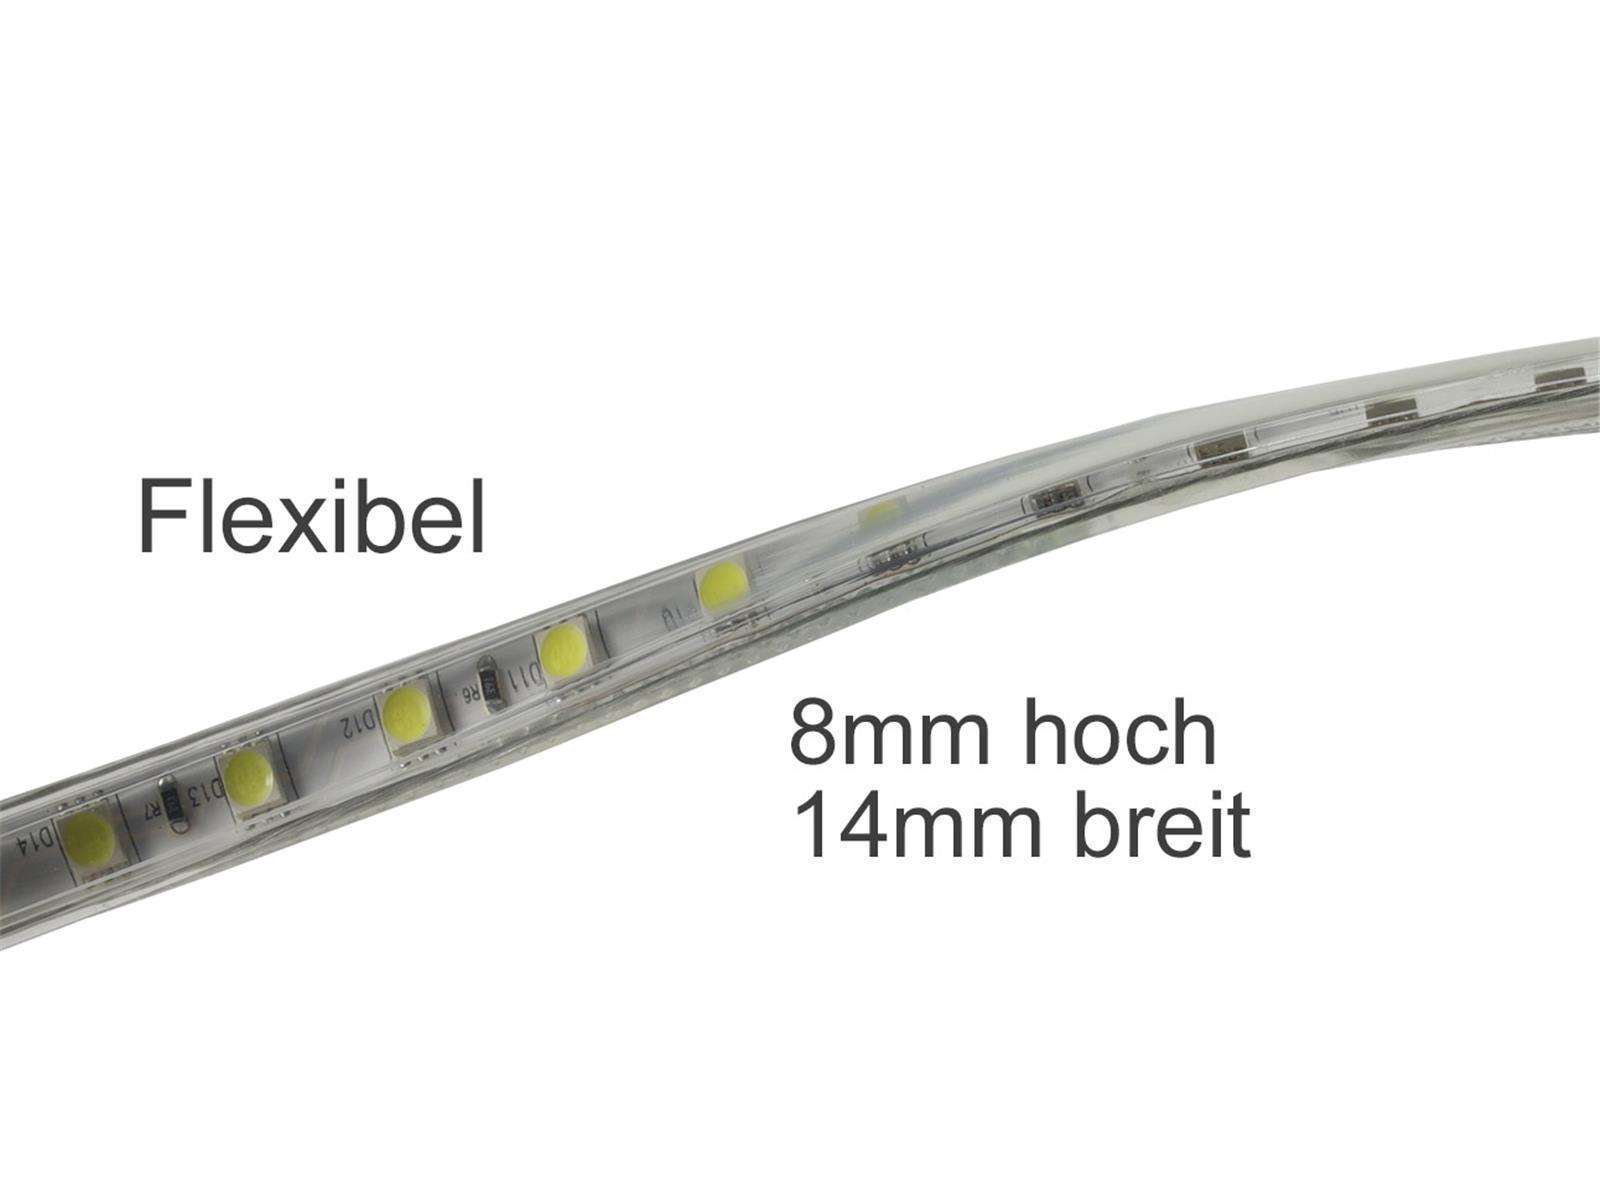 LED-Stripe "Ultra-Bright" 230V, 10m600 Lumen/Meter, warmweiß